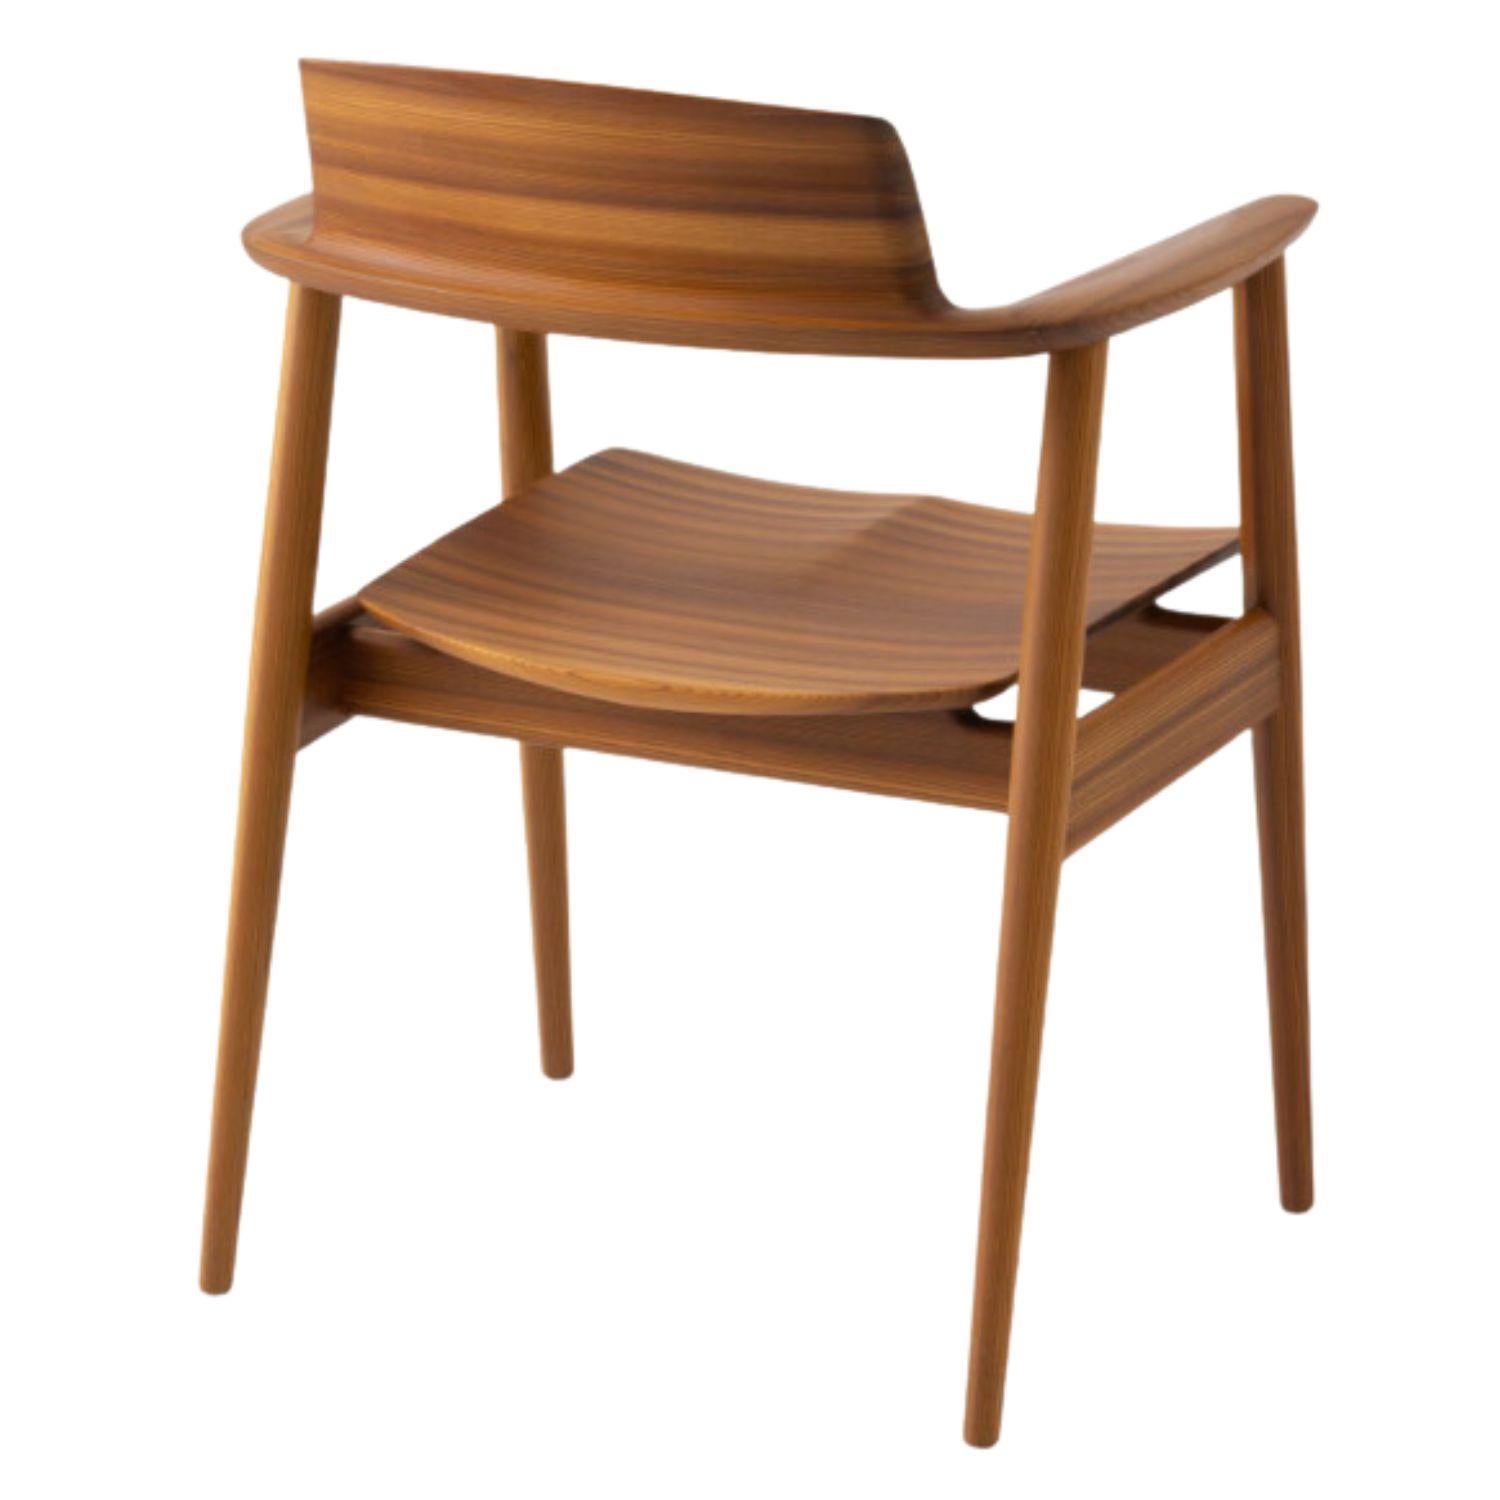 Kawakami 'Kisaragi' Model KJ200 Chair in Japanese Cedar and Upholstery for Hida For Sale 2